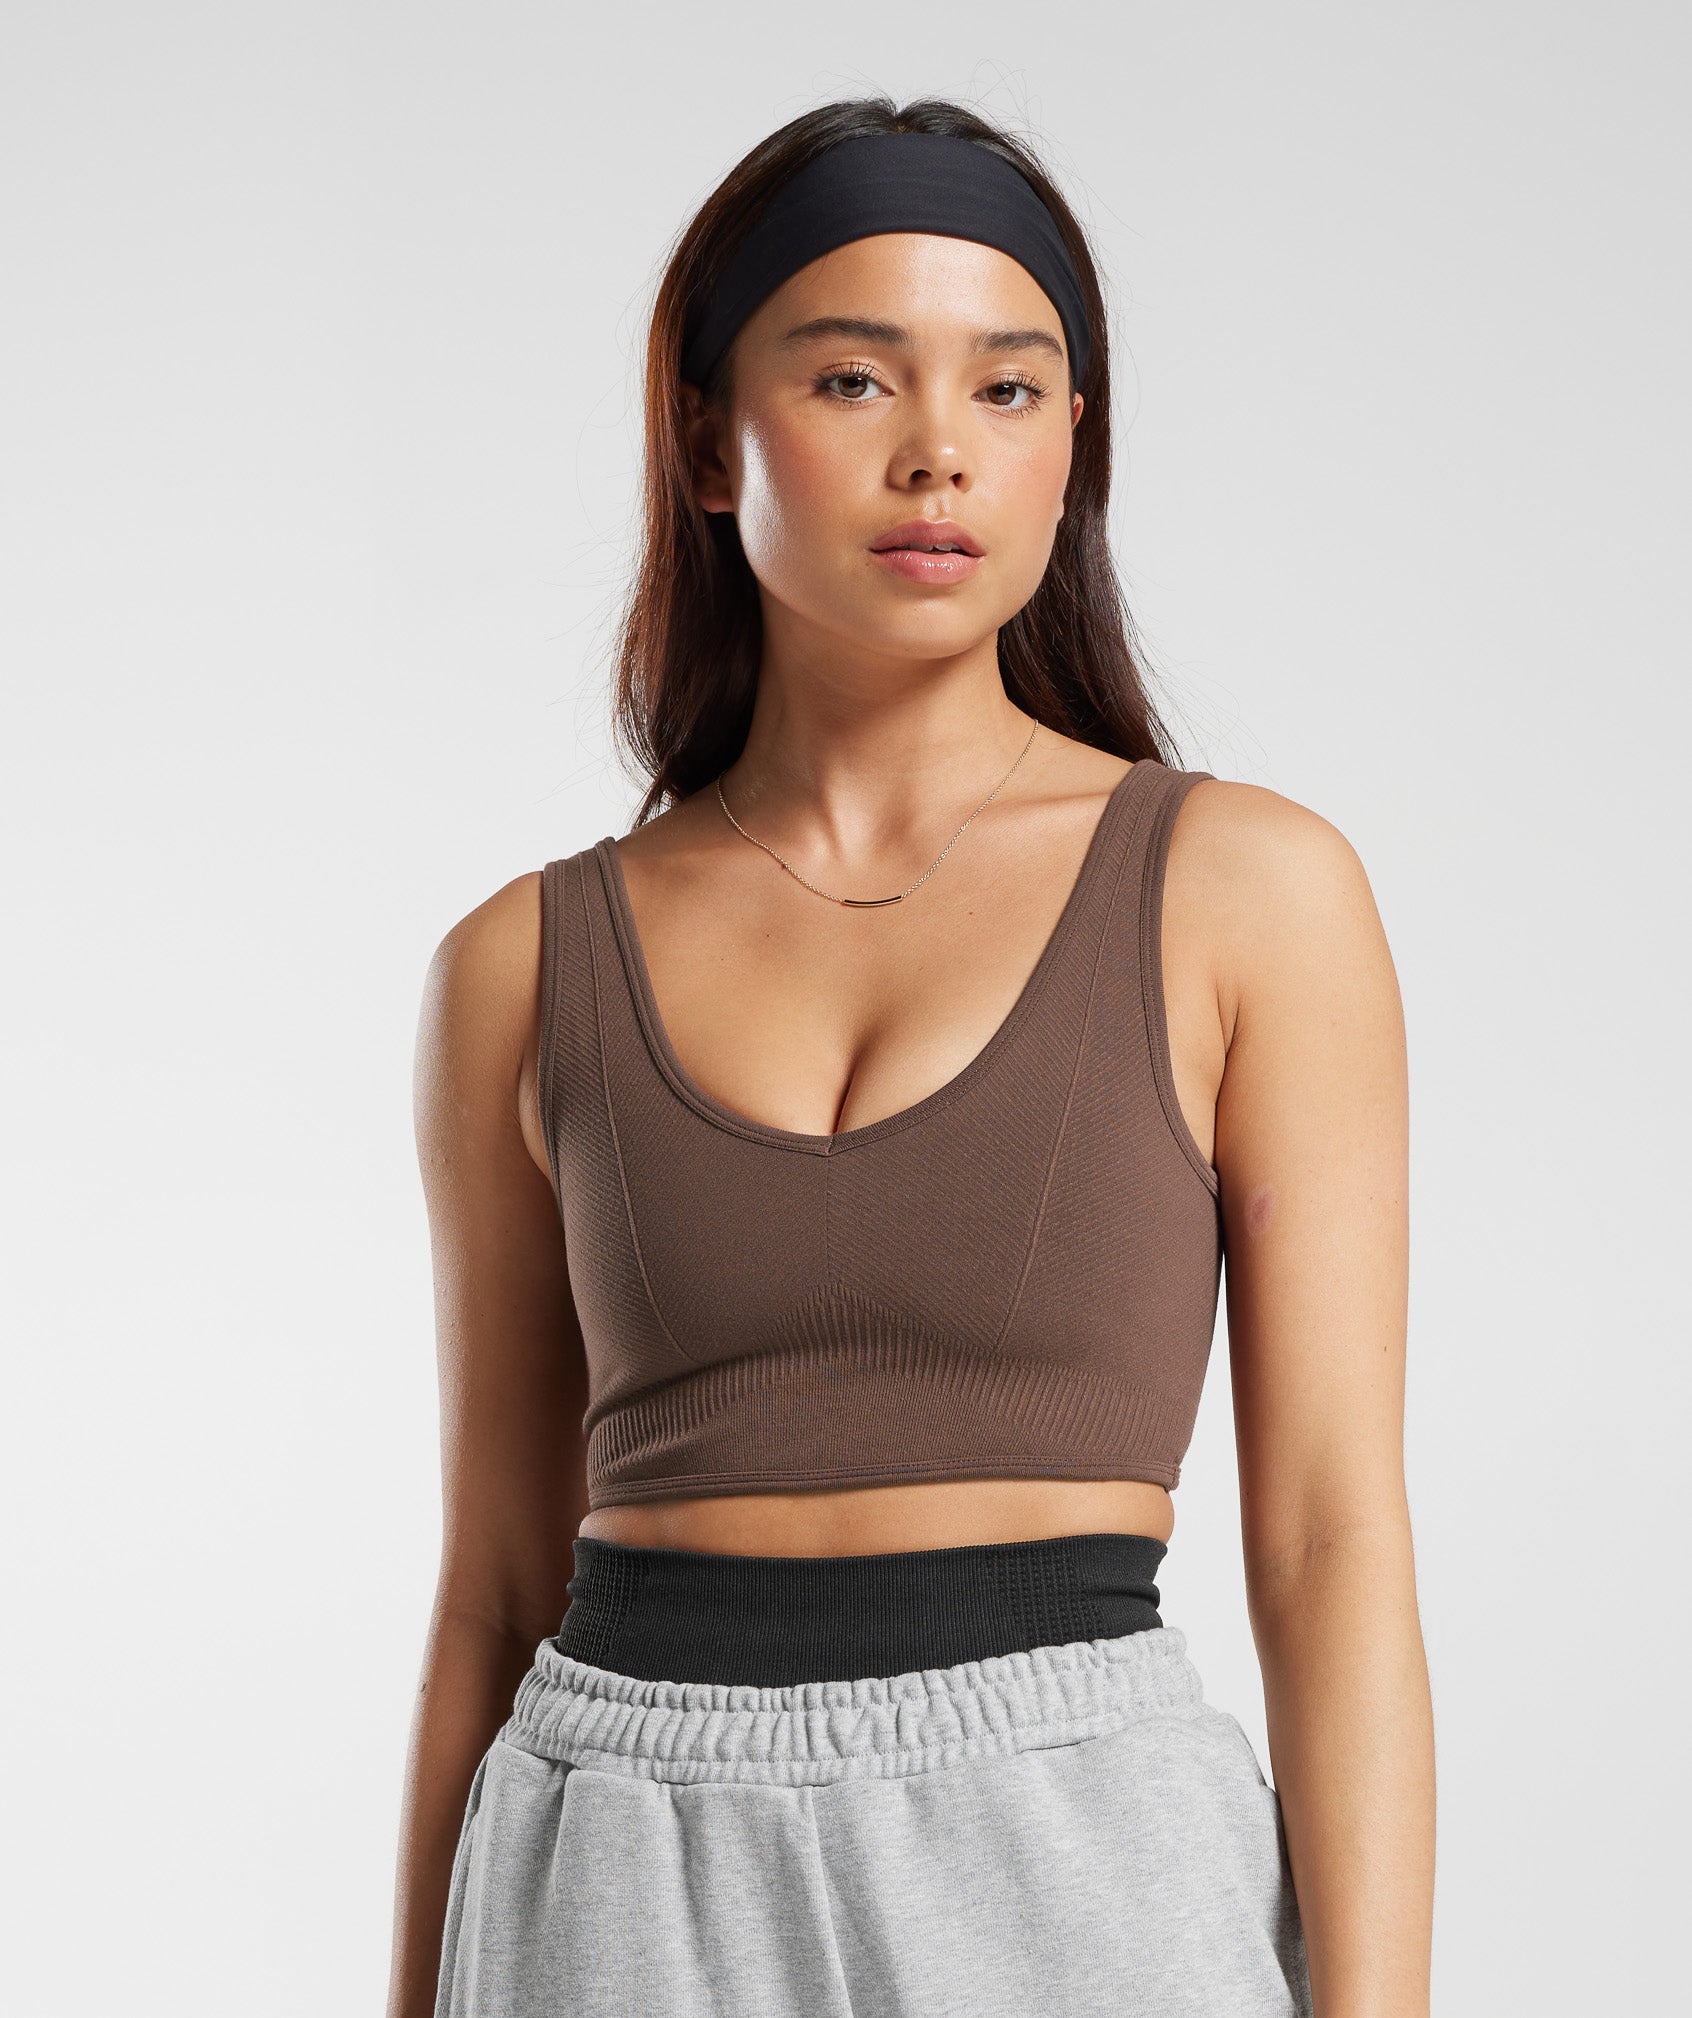 Gymshark minimal backless halter bra in soul brown - $35 - From San